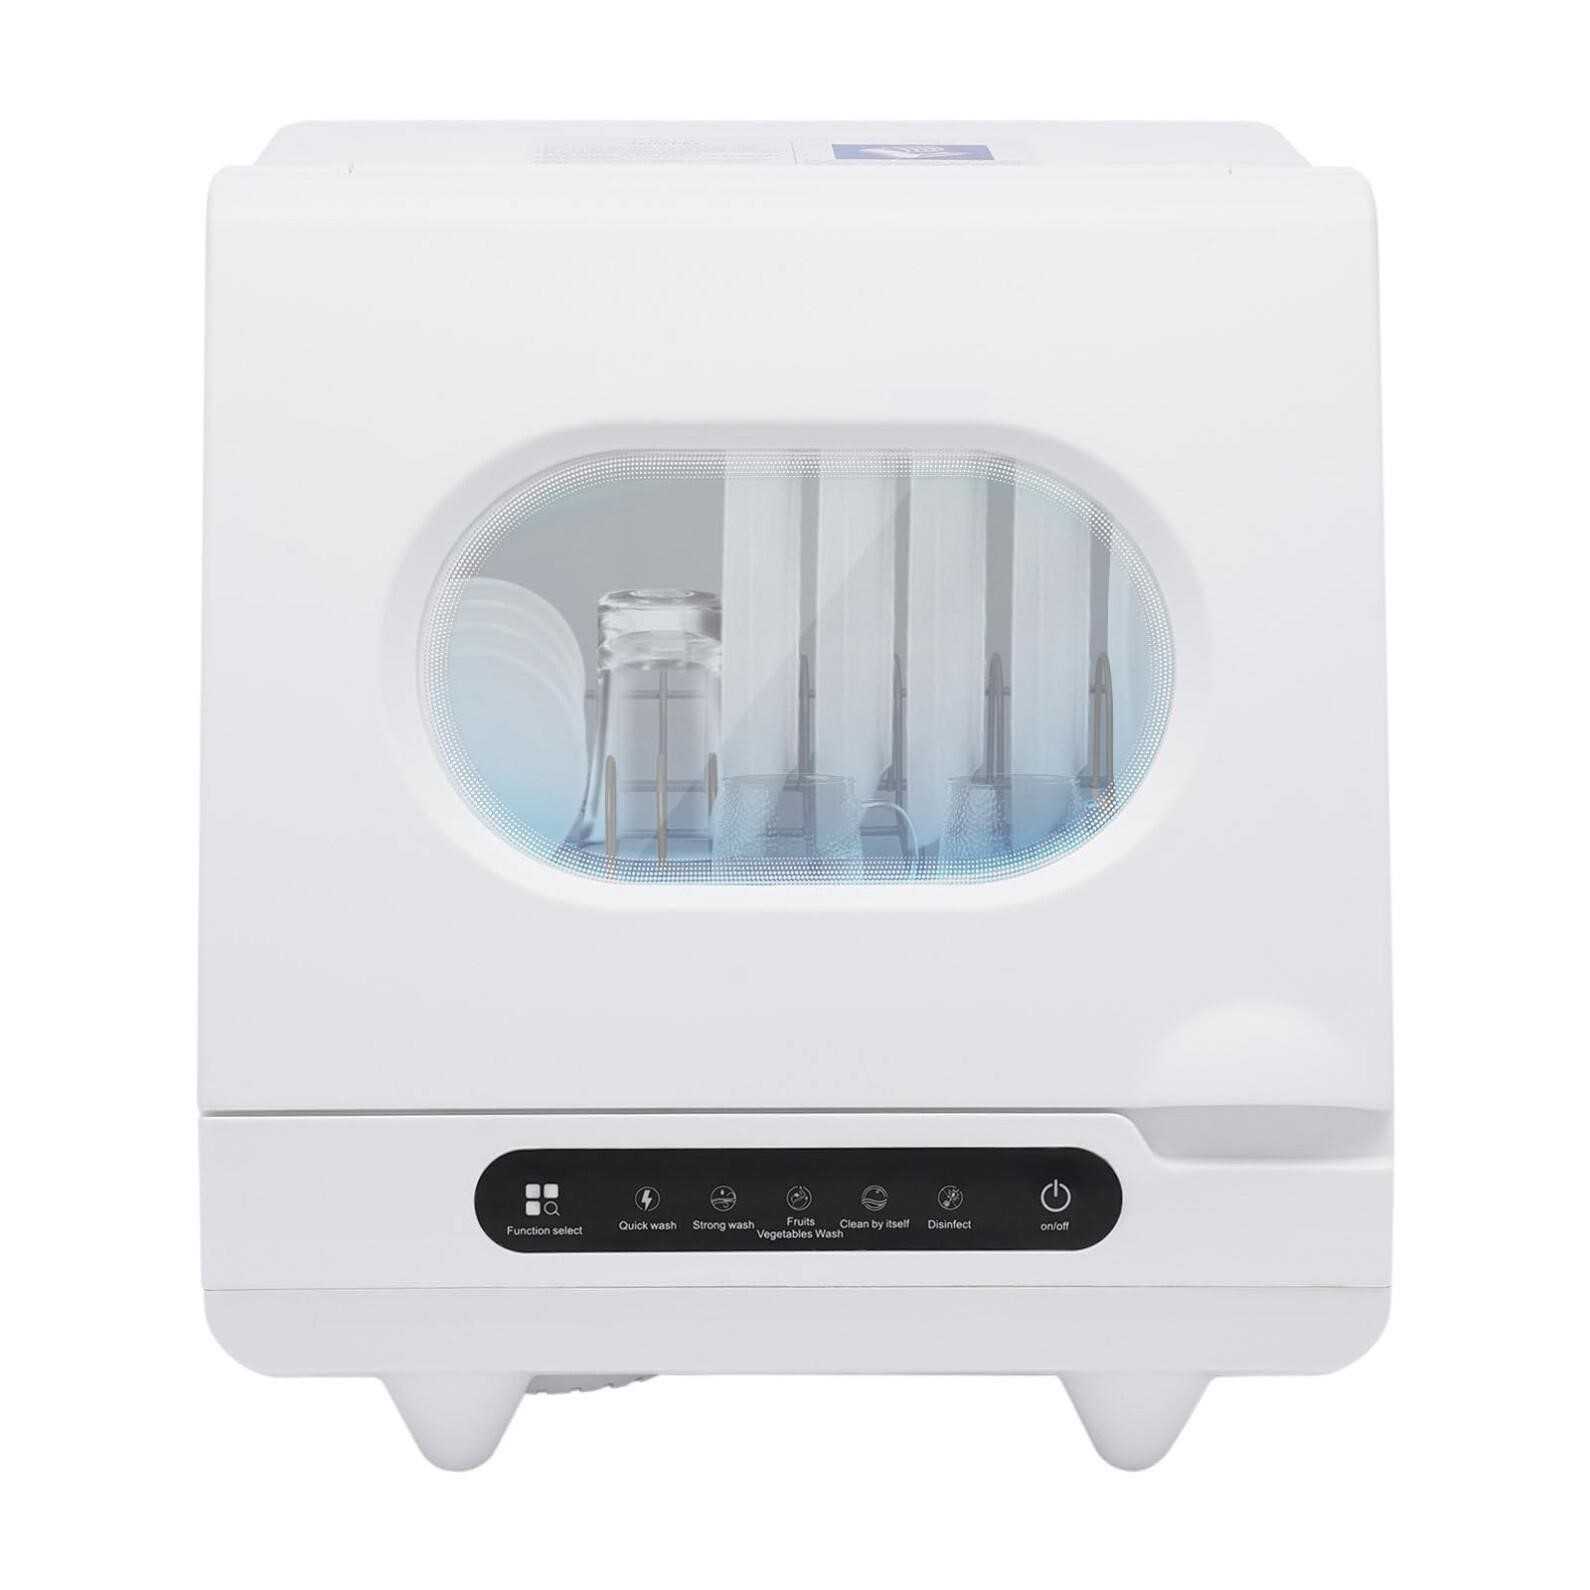 Portable Countertop Dishwasher, Mini Dishwasher wi